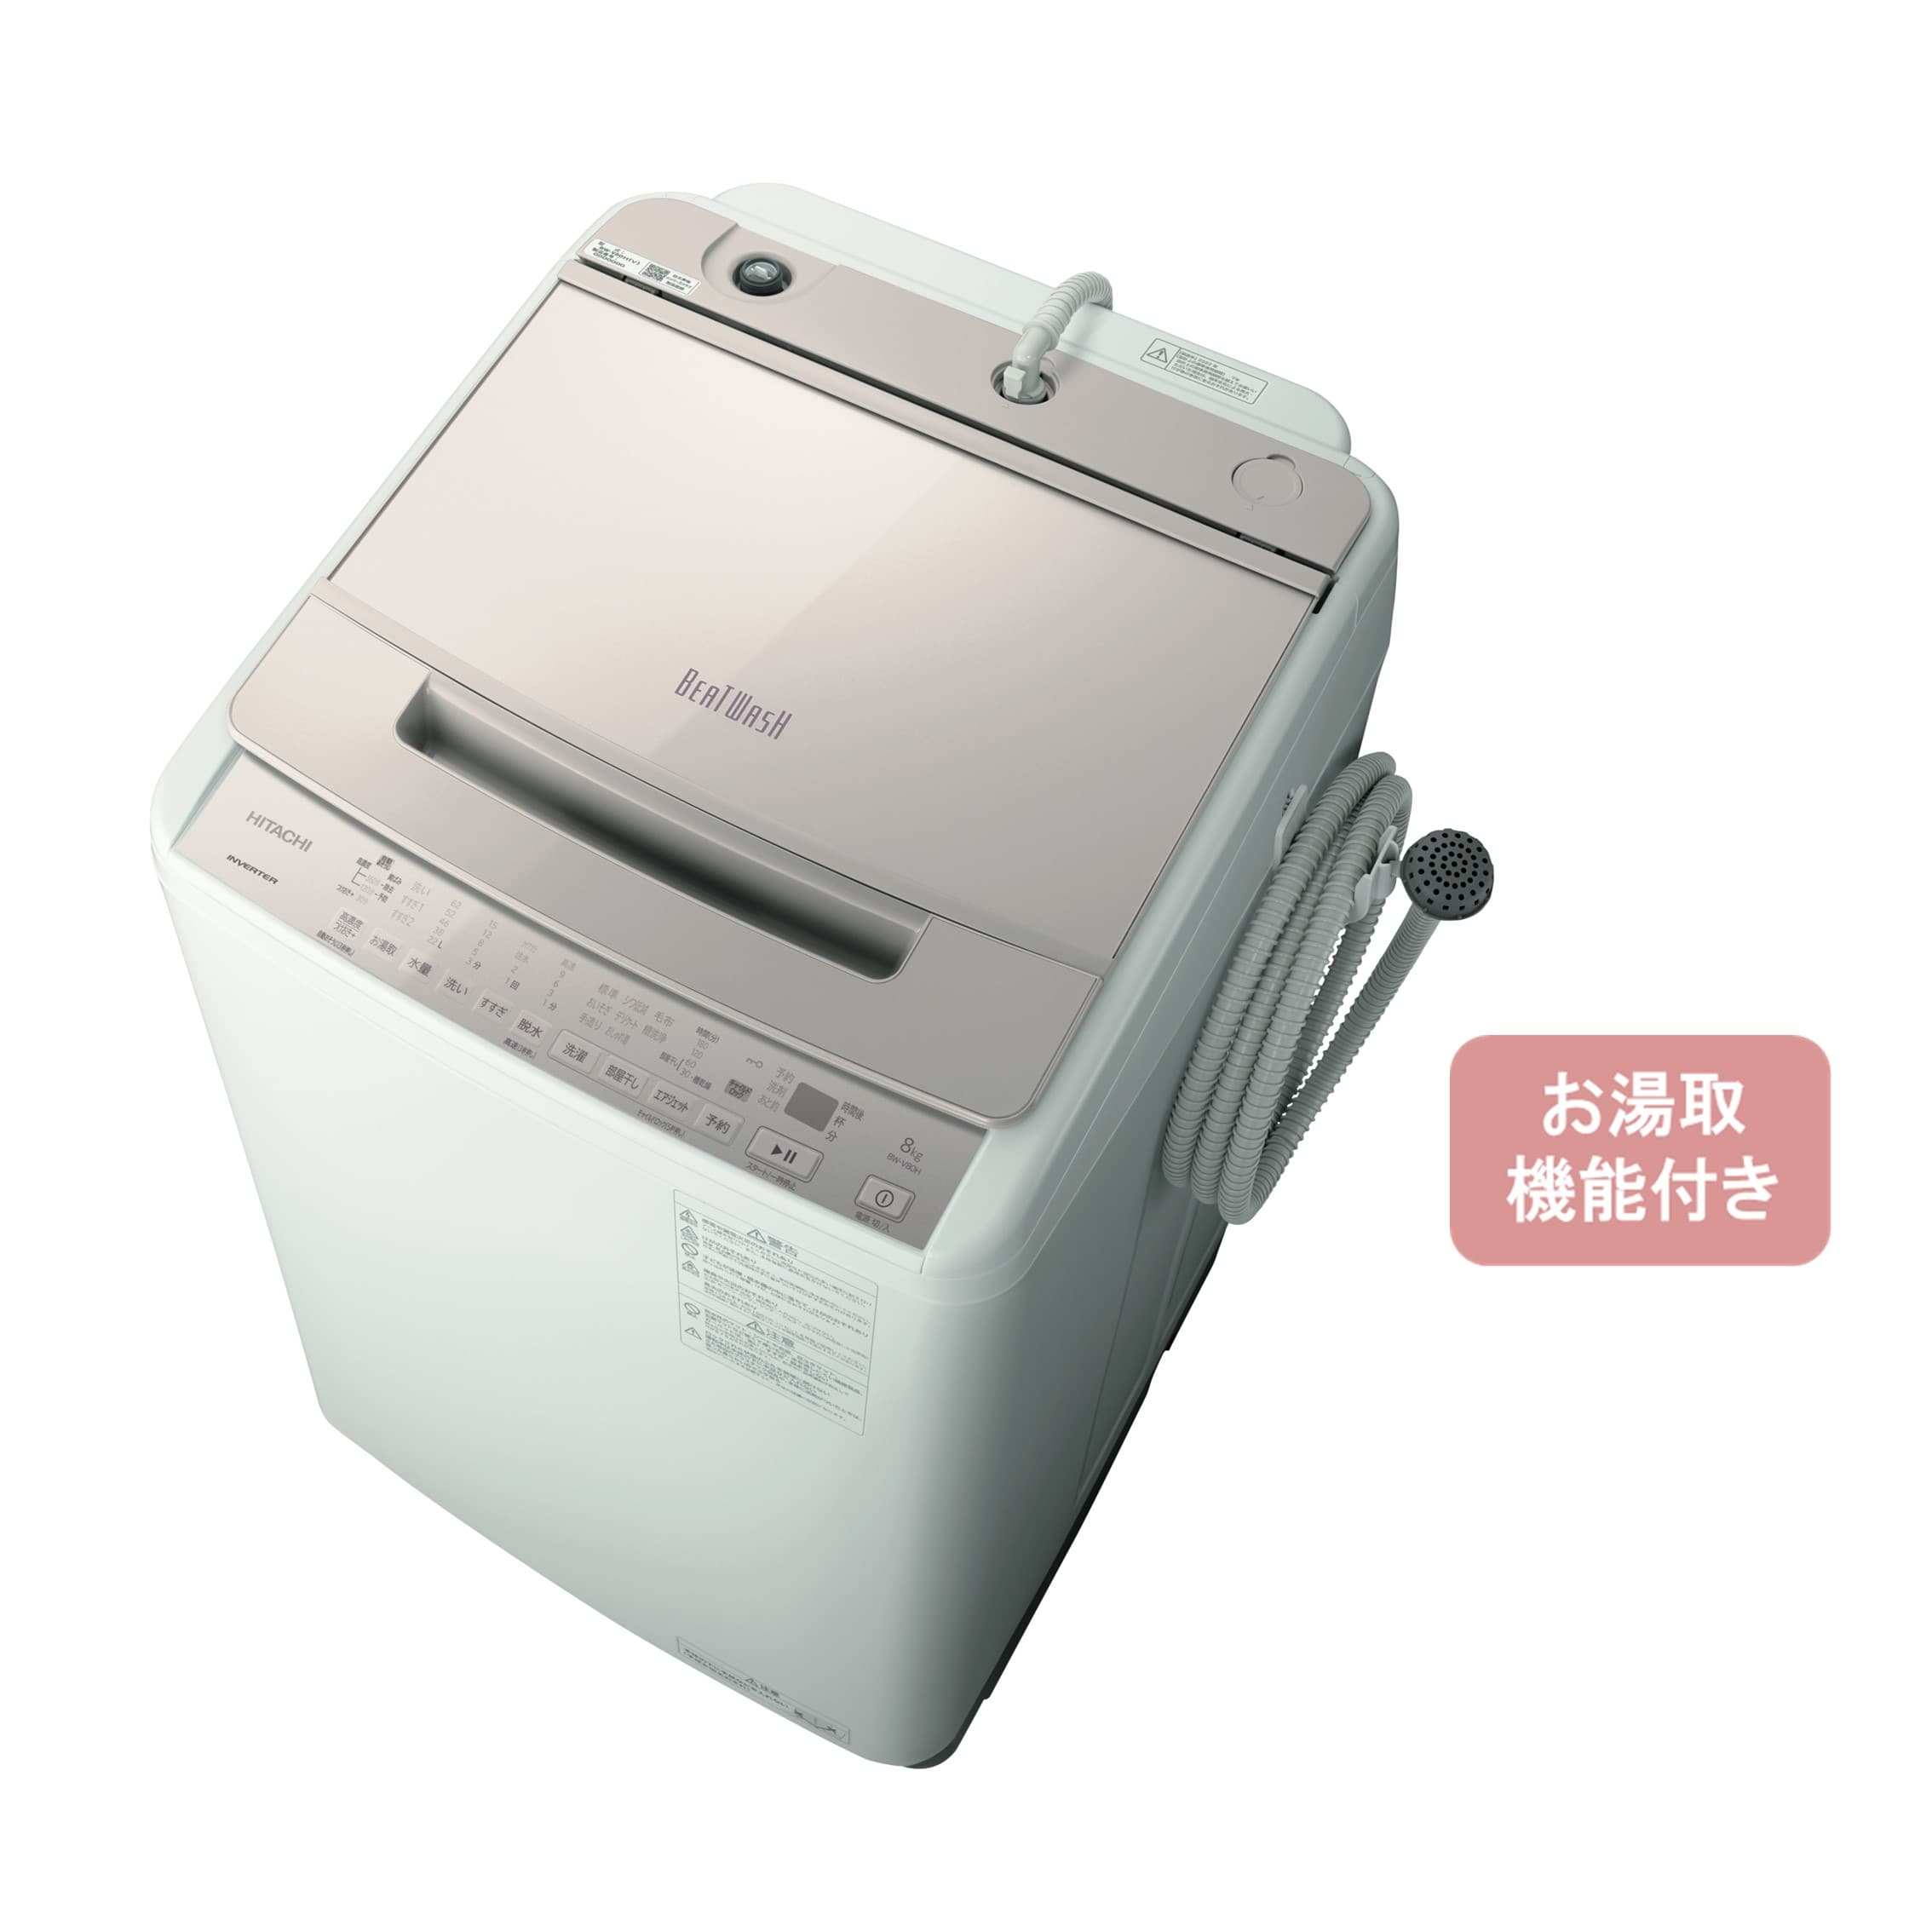 HITACHI 縦型洗濯乾燥機 BW-D7PV - 生活家電